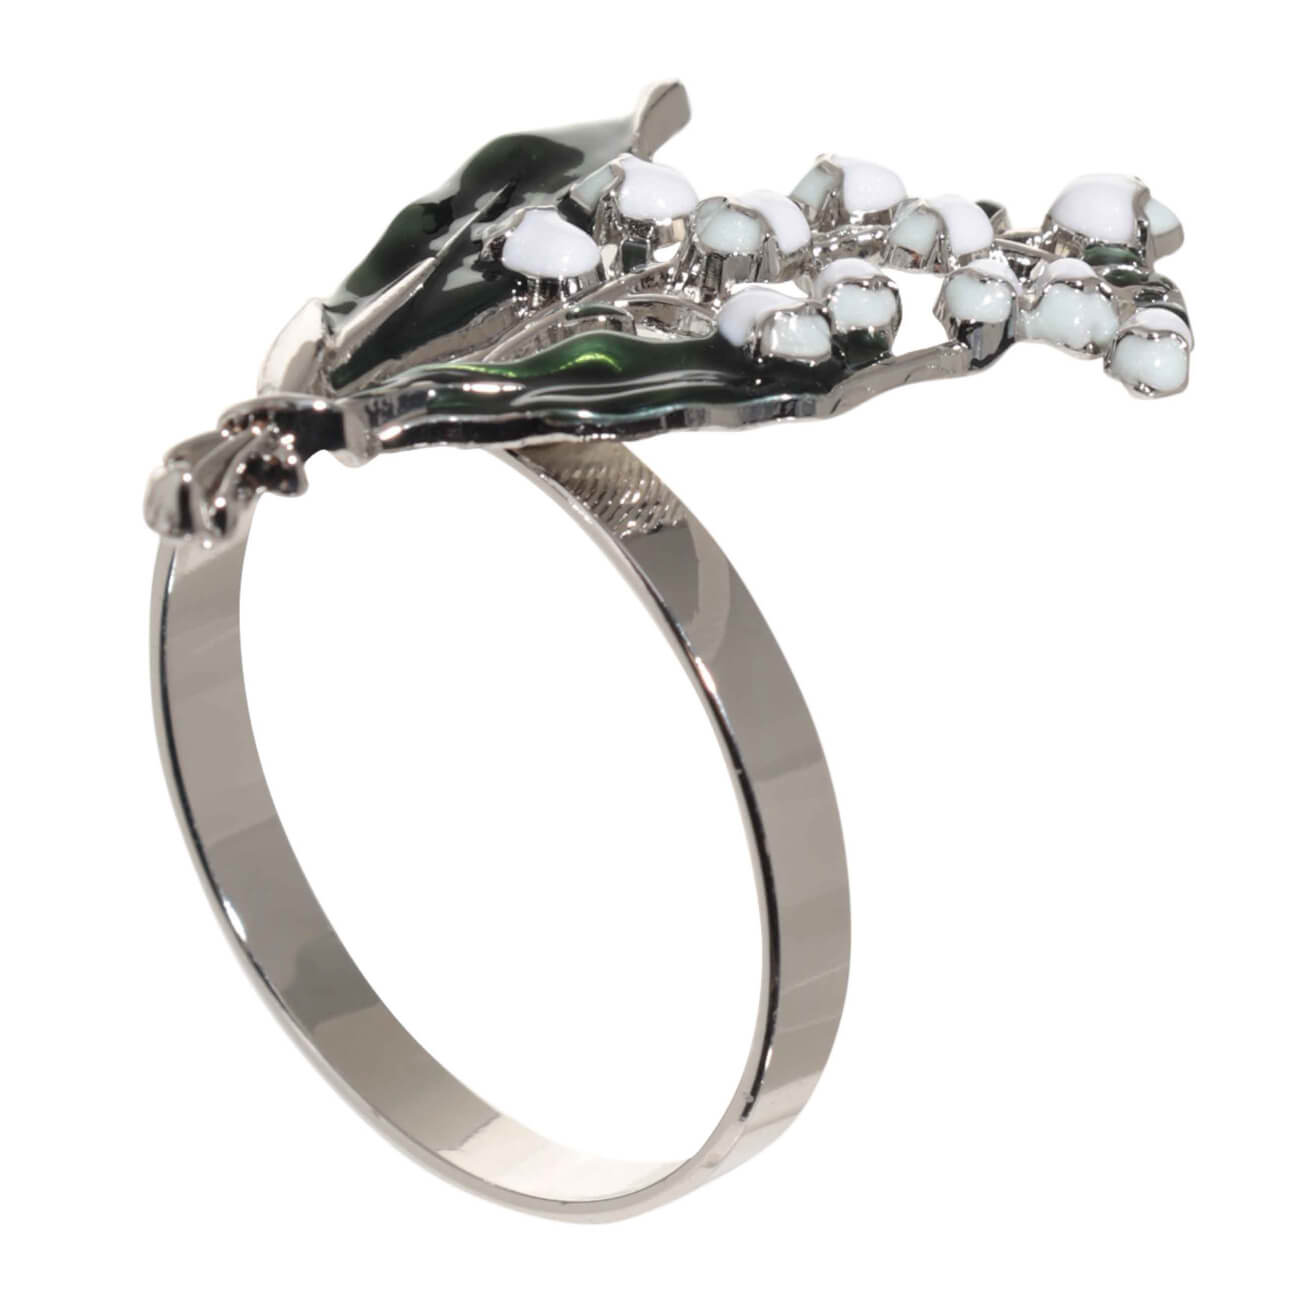 Кольцо для салфеток, 5 см, металл, зелено-серебристое, Ландыш с листьями, May-lily кольцо sos золото безразмерное